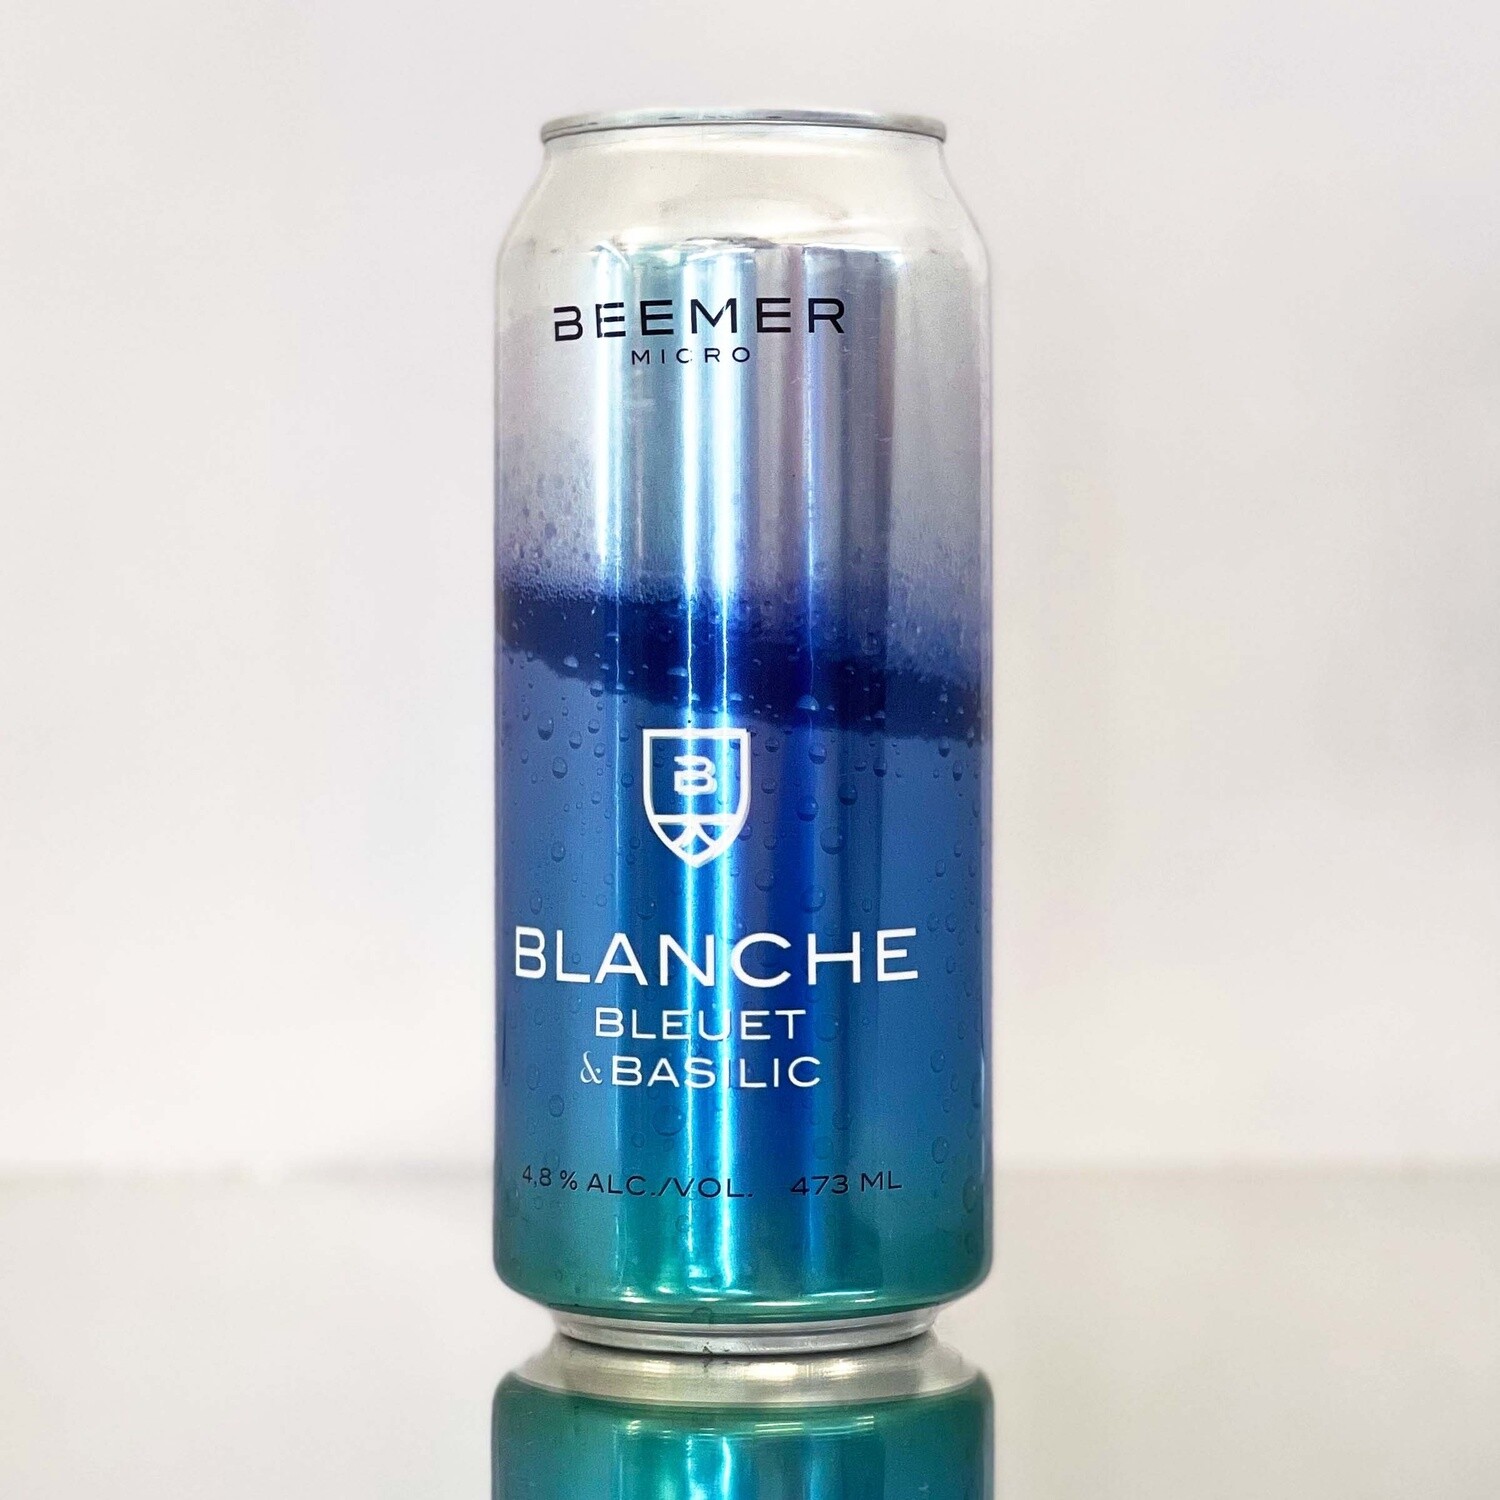 Beemer - Blanche Bleuet Basilic